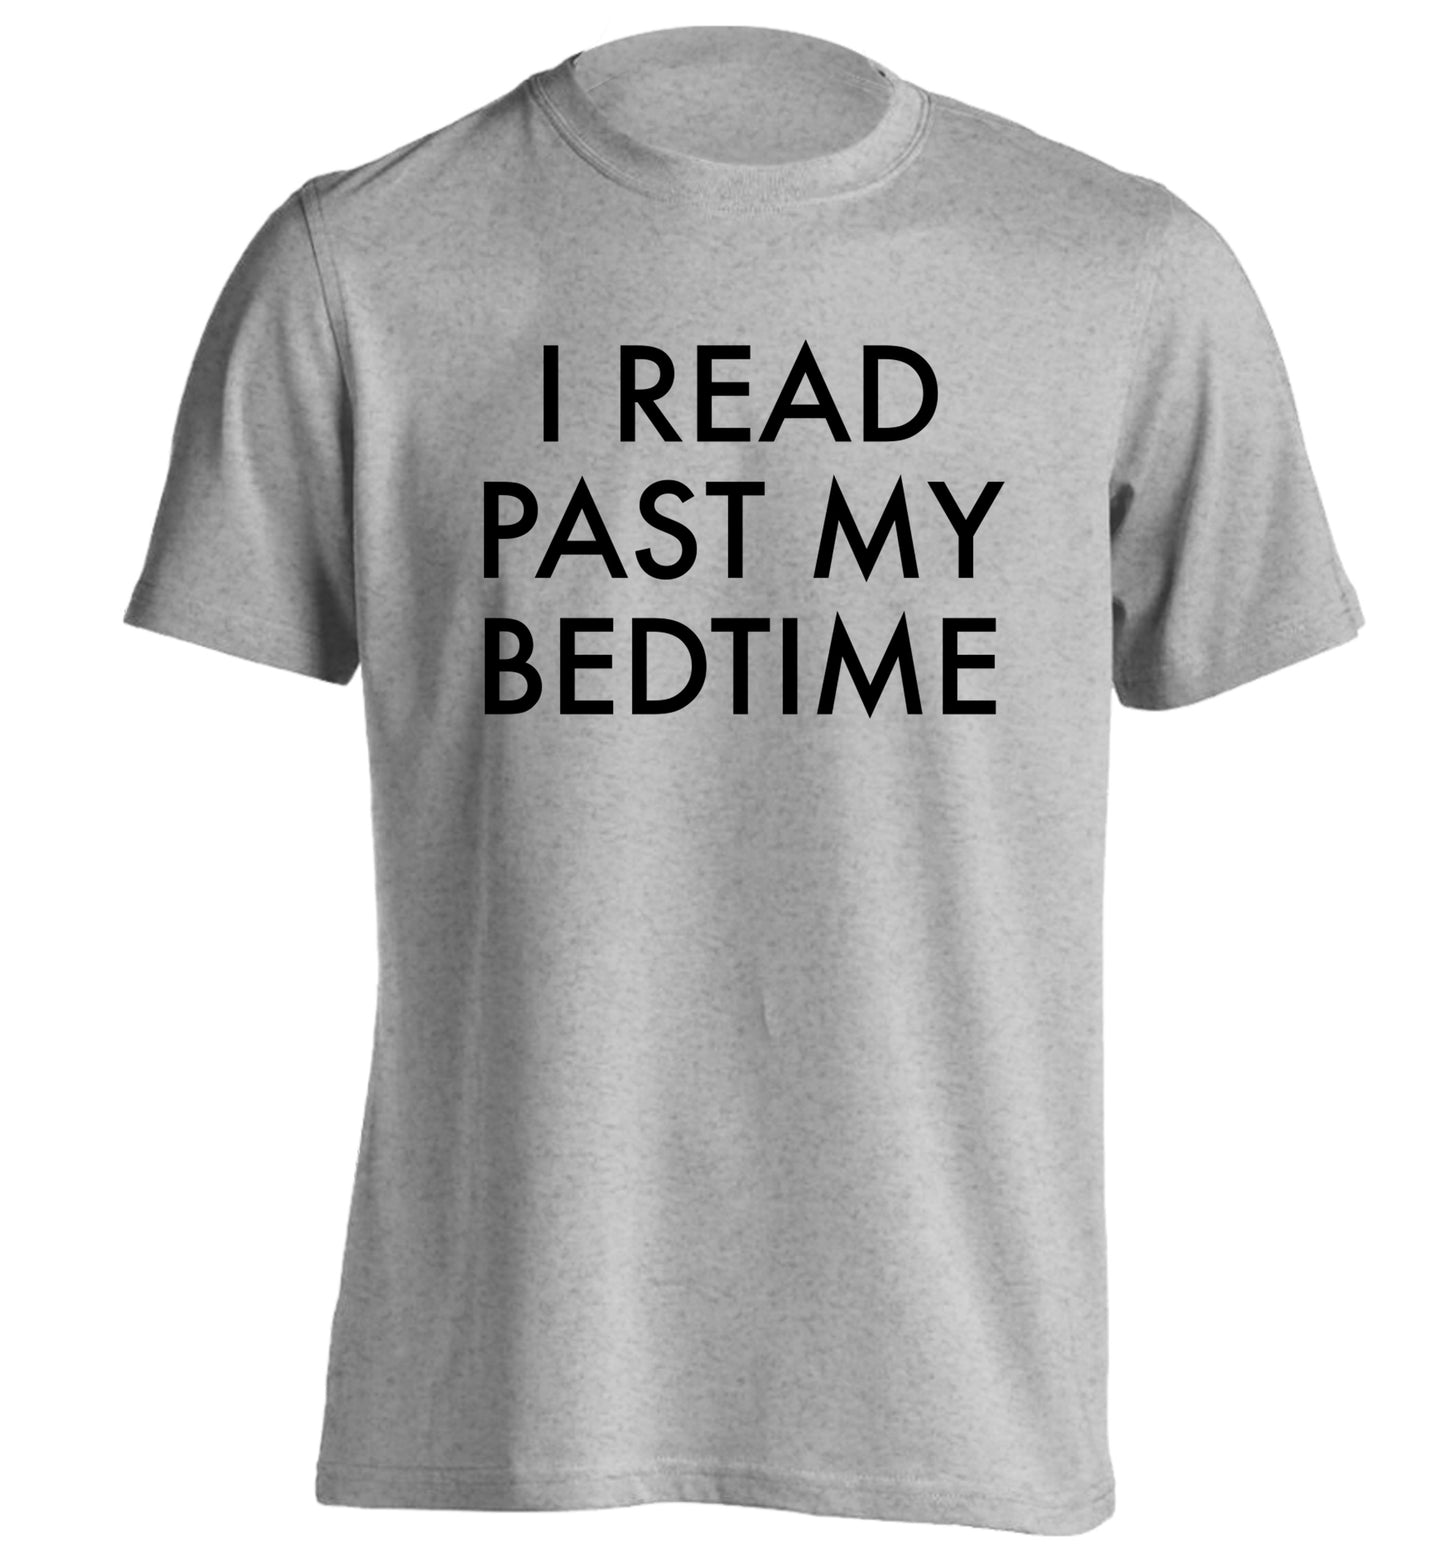 I read past my bedtime adults unisex grey Tshirt 2XL